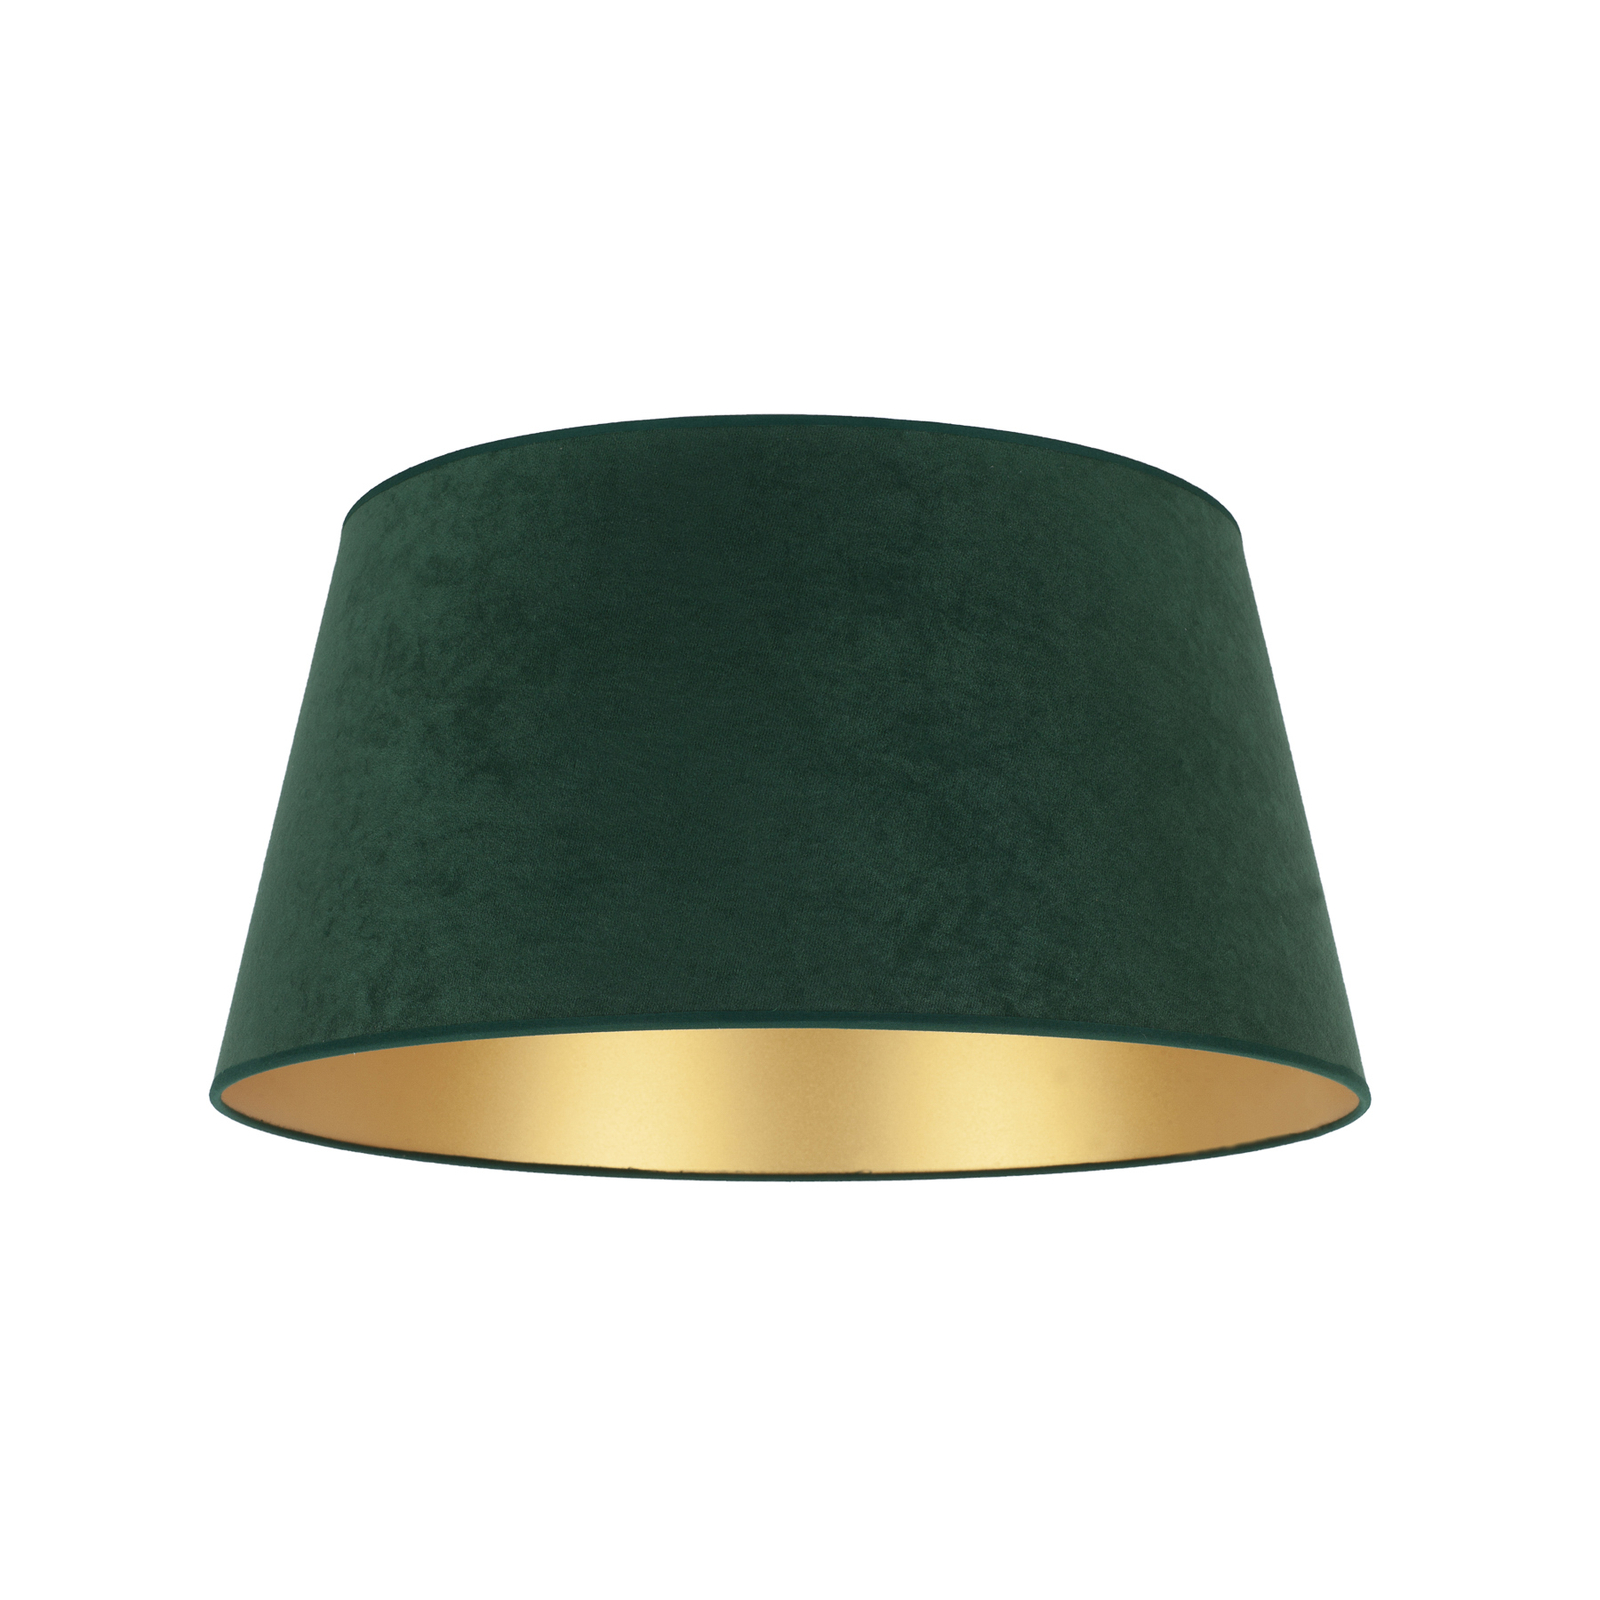 Cone lampshade height 25.5 cm, dark green/gold